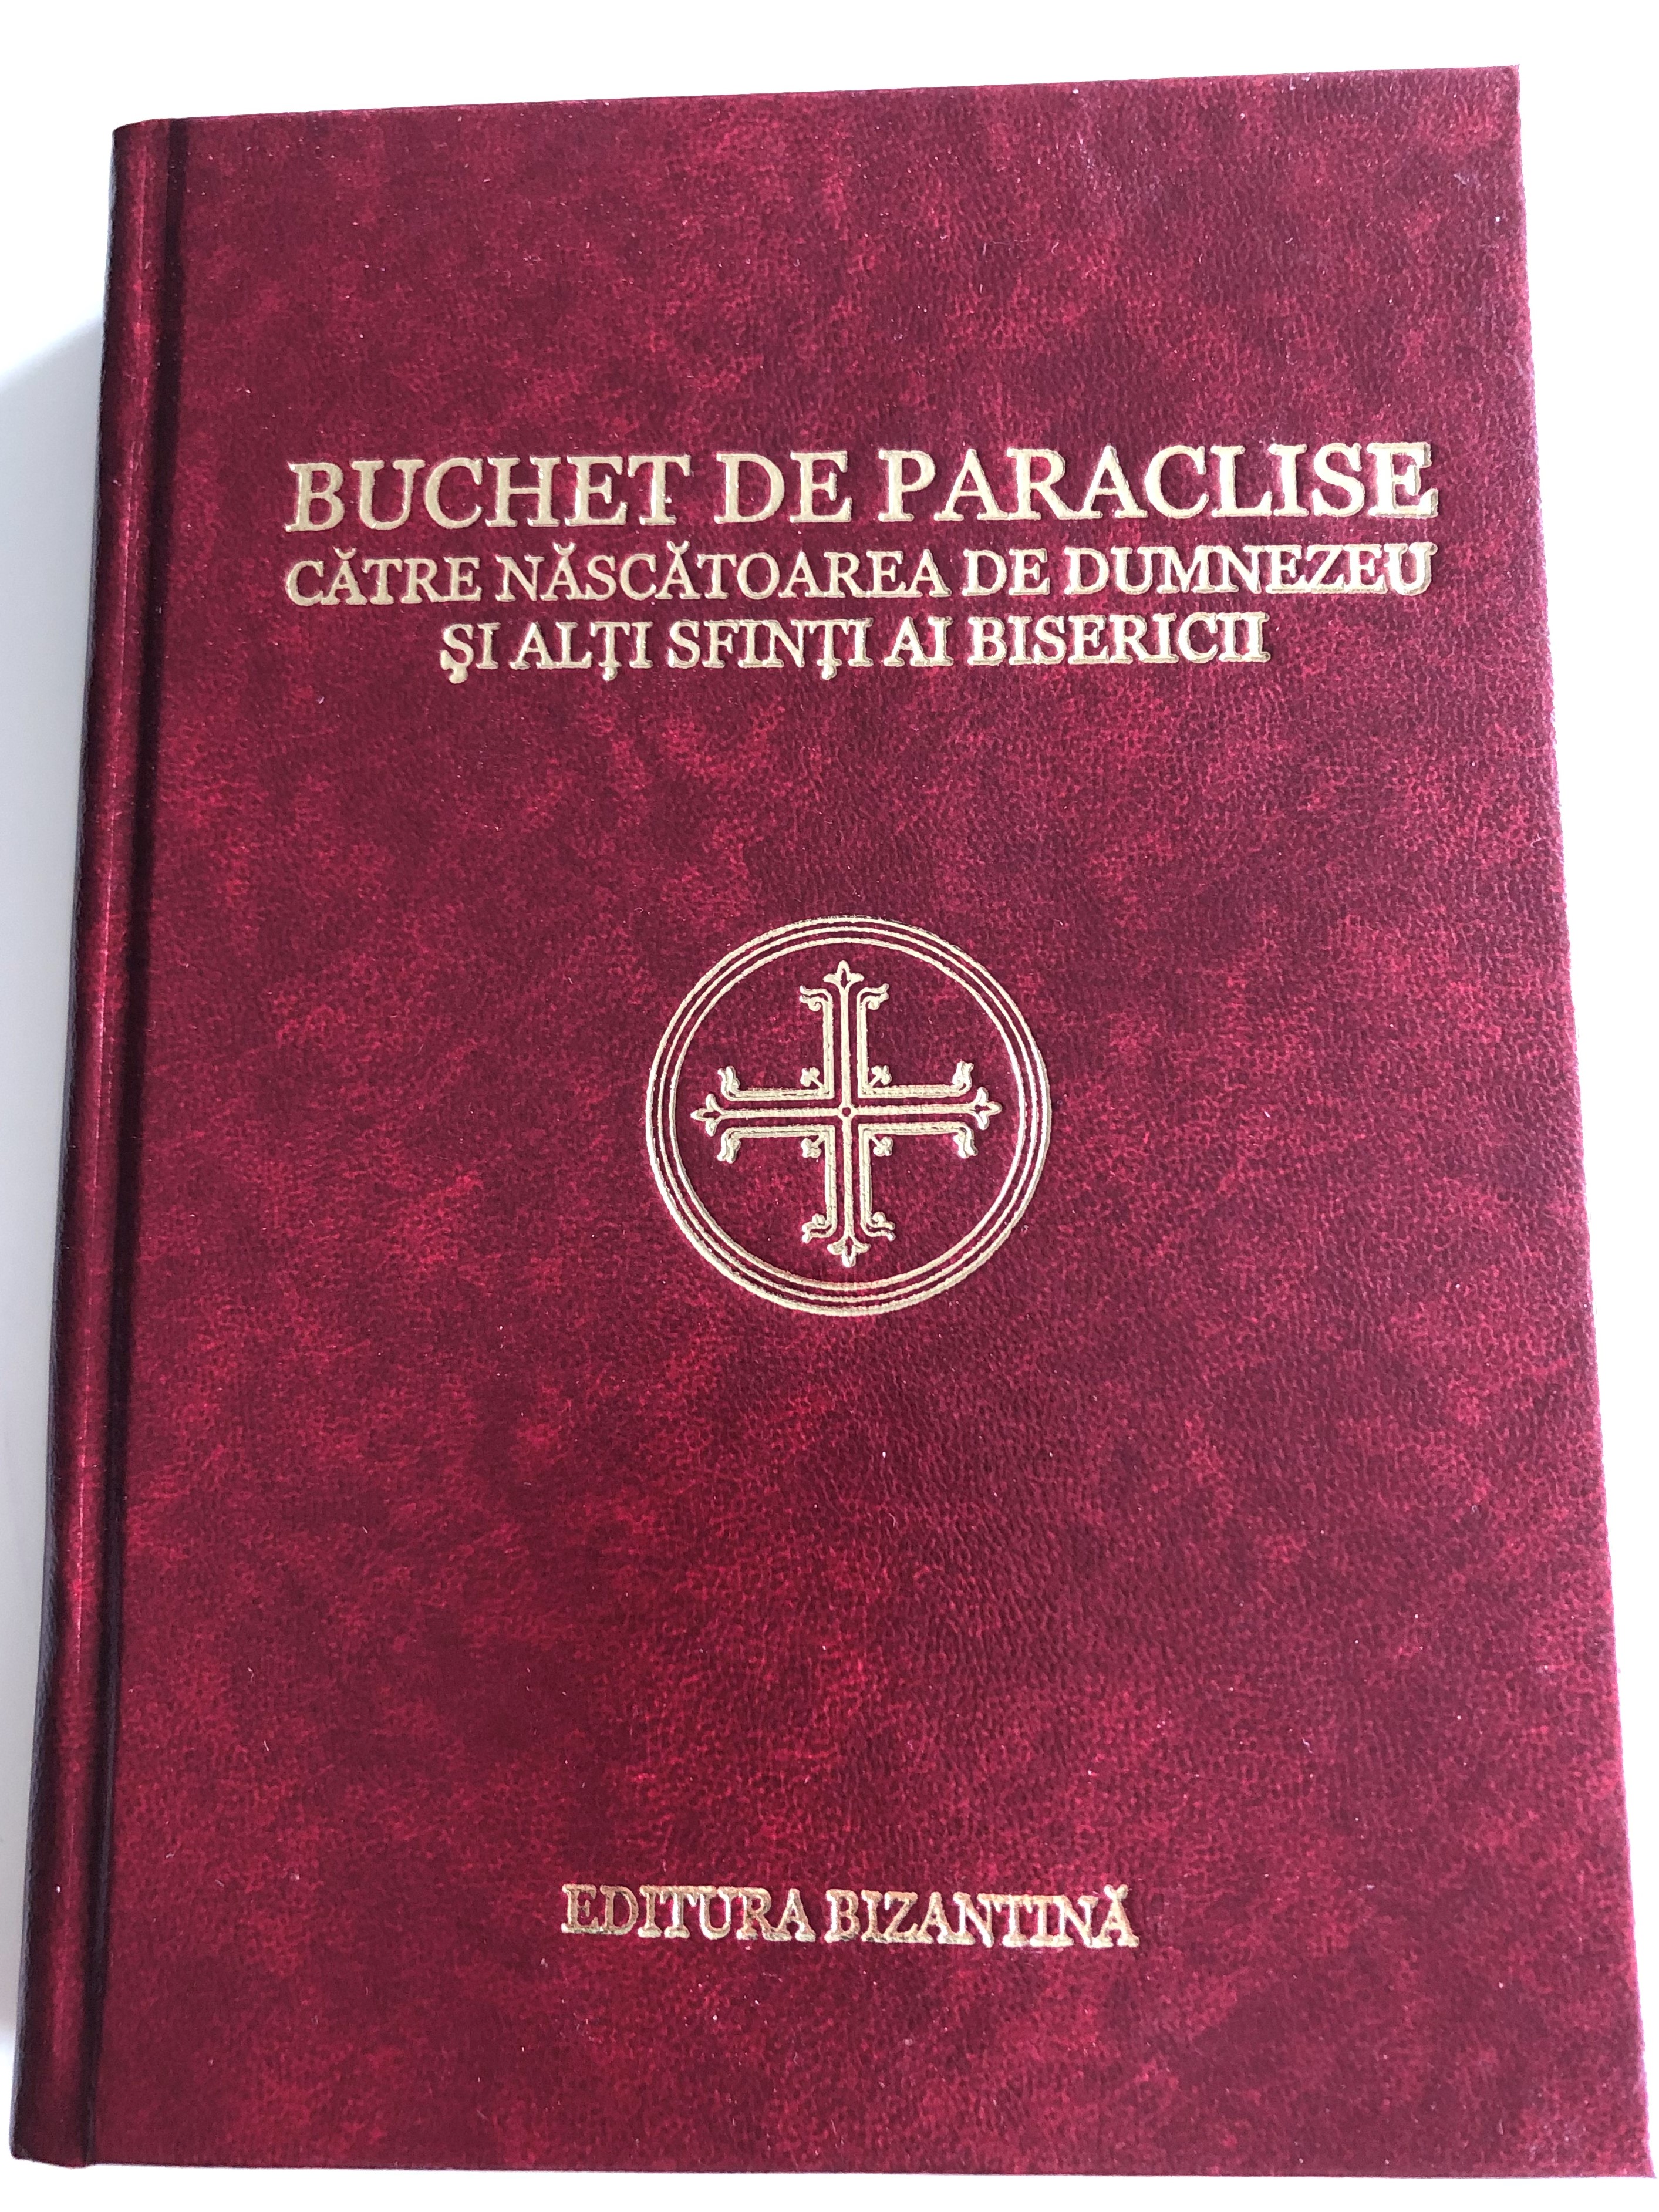 canons-of-prayer-in-romanian-language-buchet-de-paraclise-c-tre-n-sc-toarea-de-dumnezeu-i-al-i-sfin-i-ai-bisericii-editura-bizantin-2006-romanian-orthodox-prayerbook-hardcover-1-.jpg